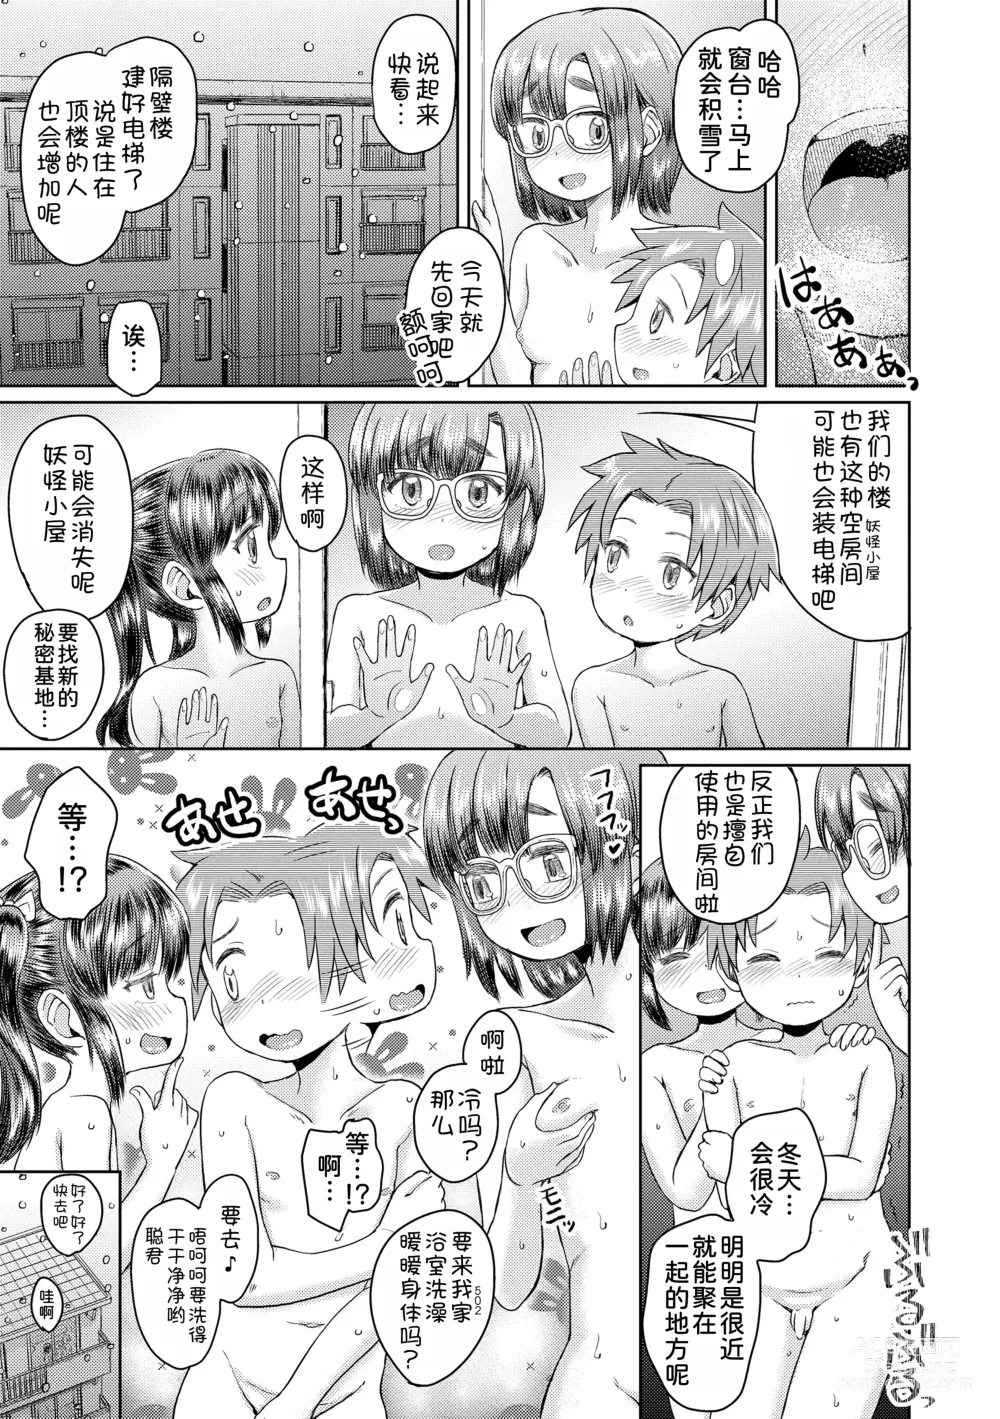 Page 81 of manga Akagane Danchi no Obake Heya Ch. 1-3